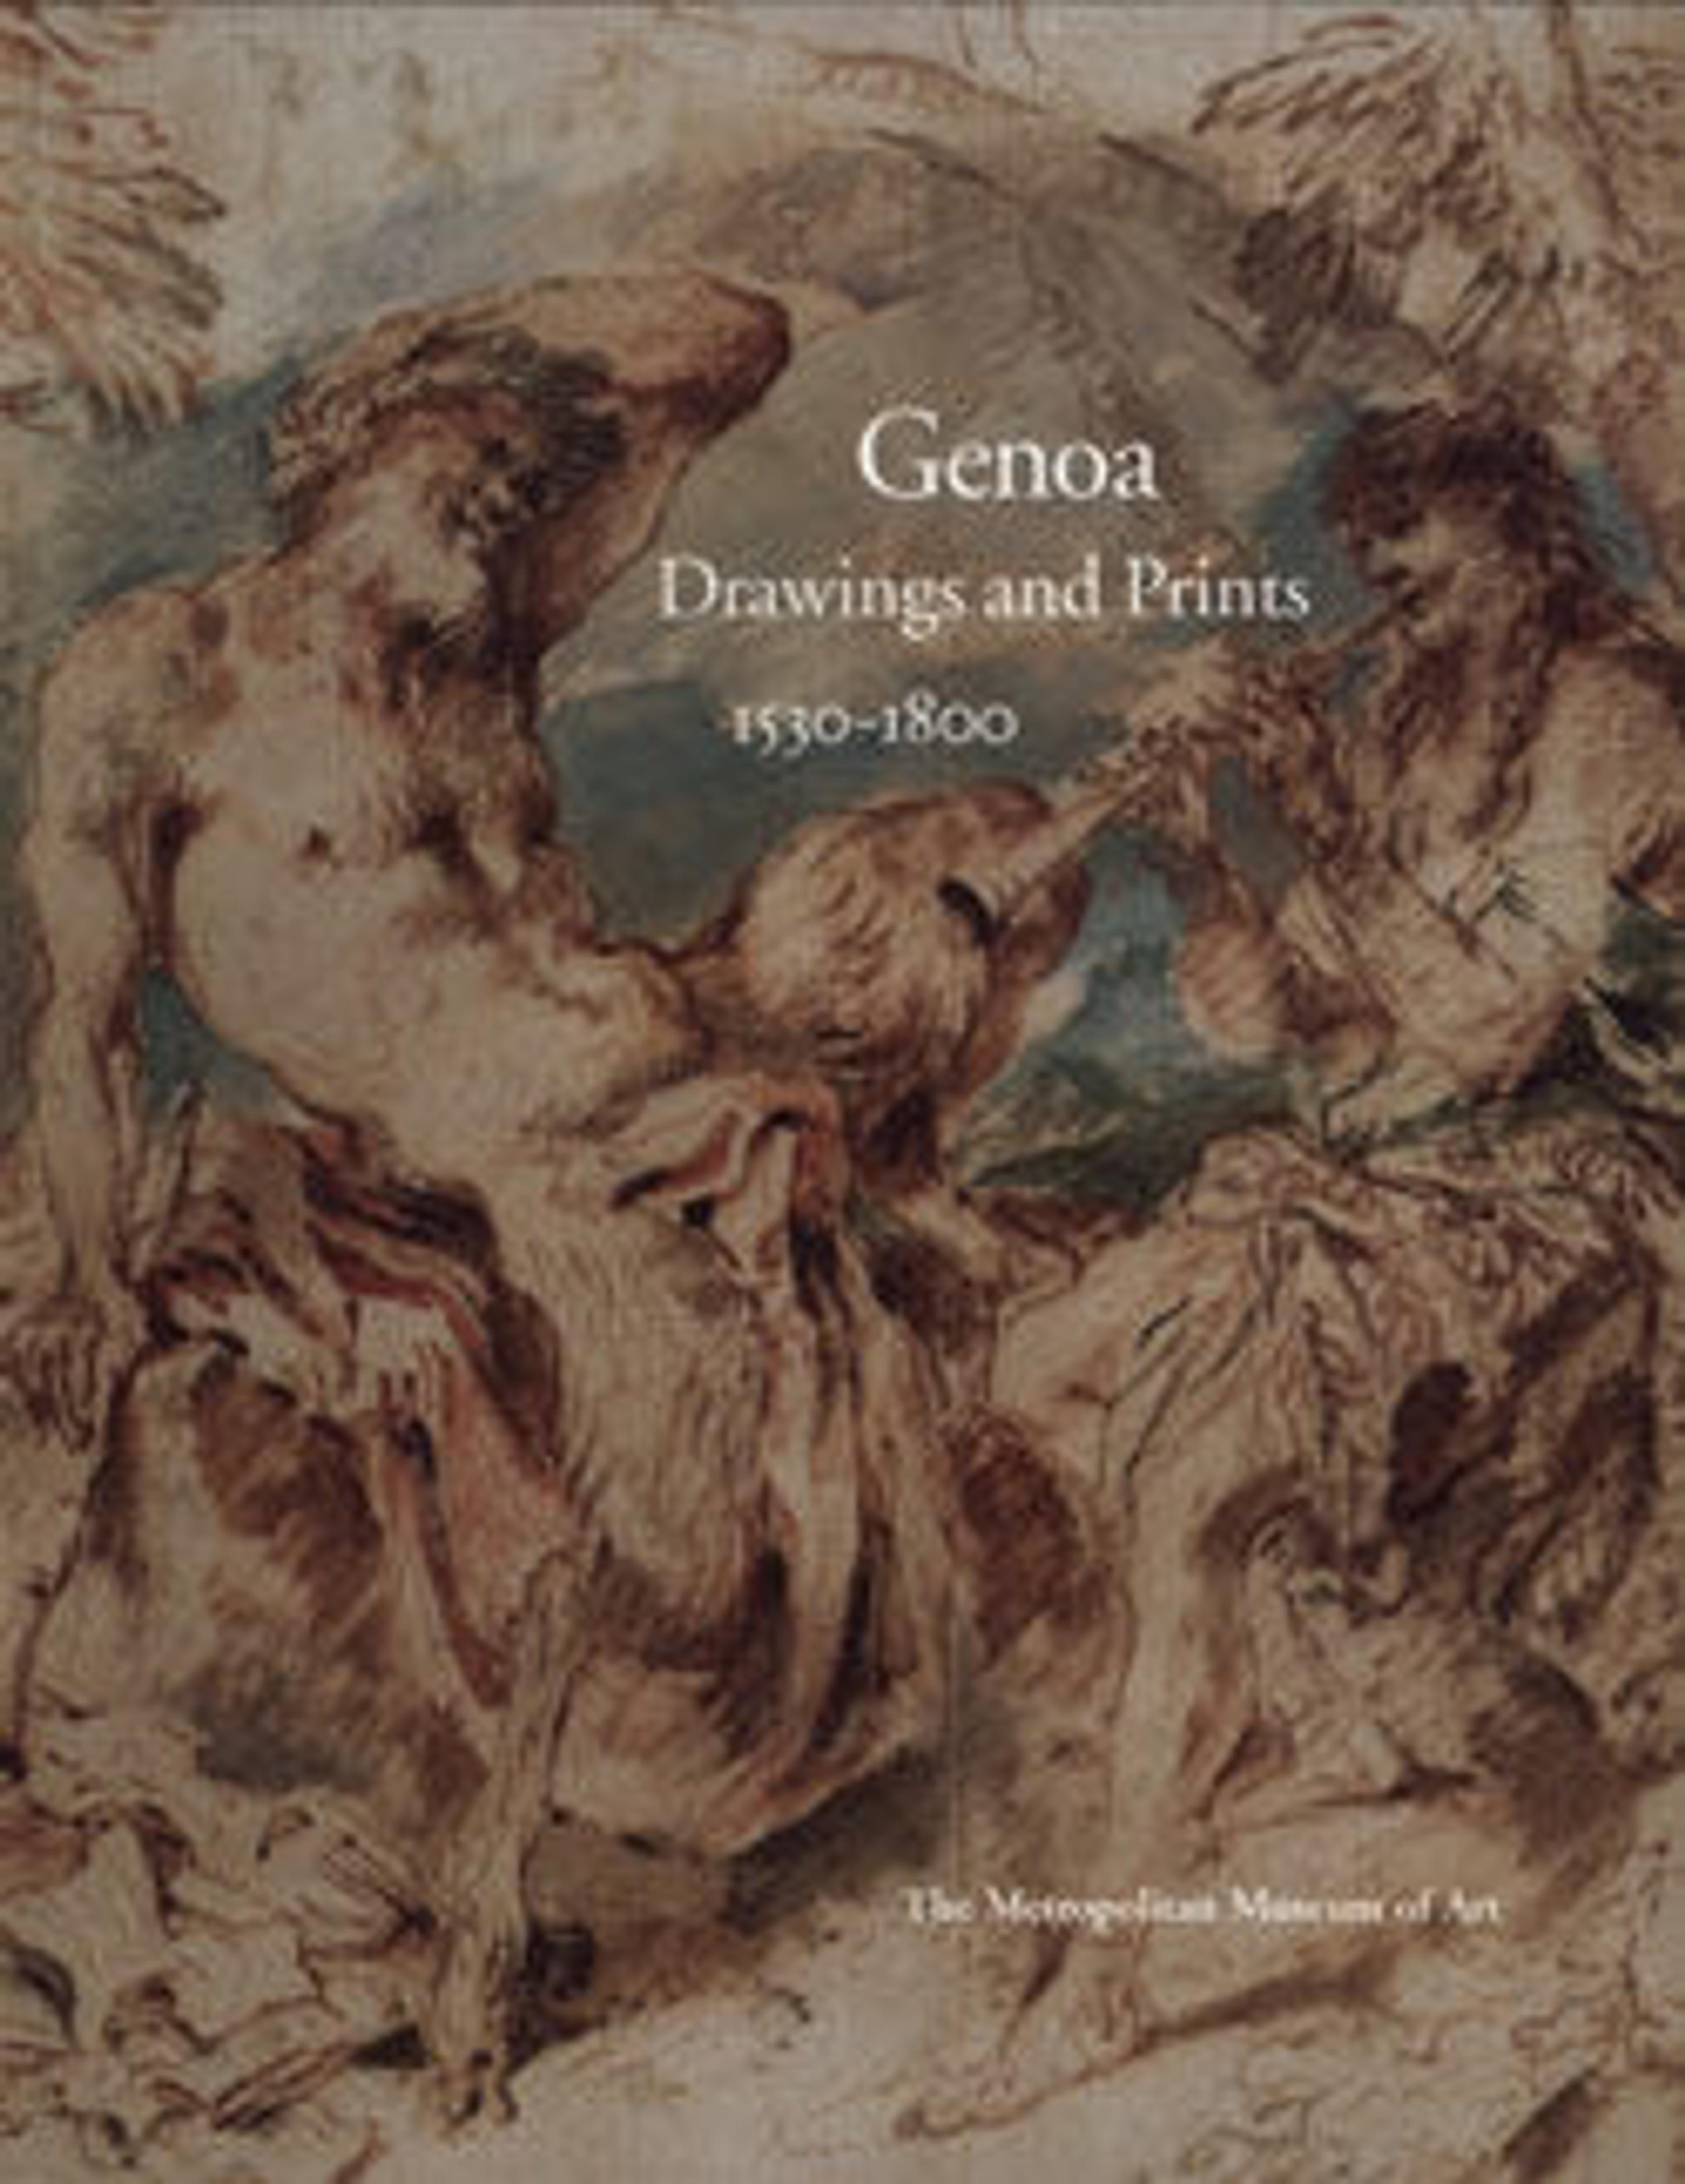 Genoa: Drawings and Prints, 1530-1800